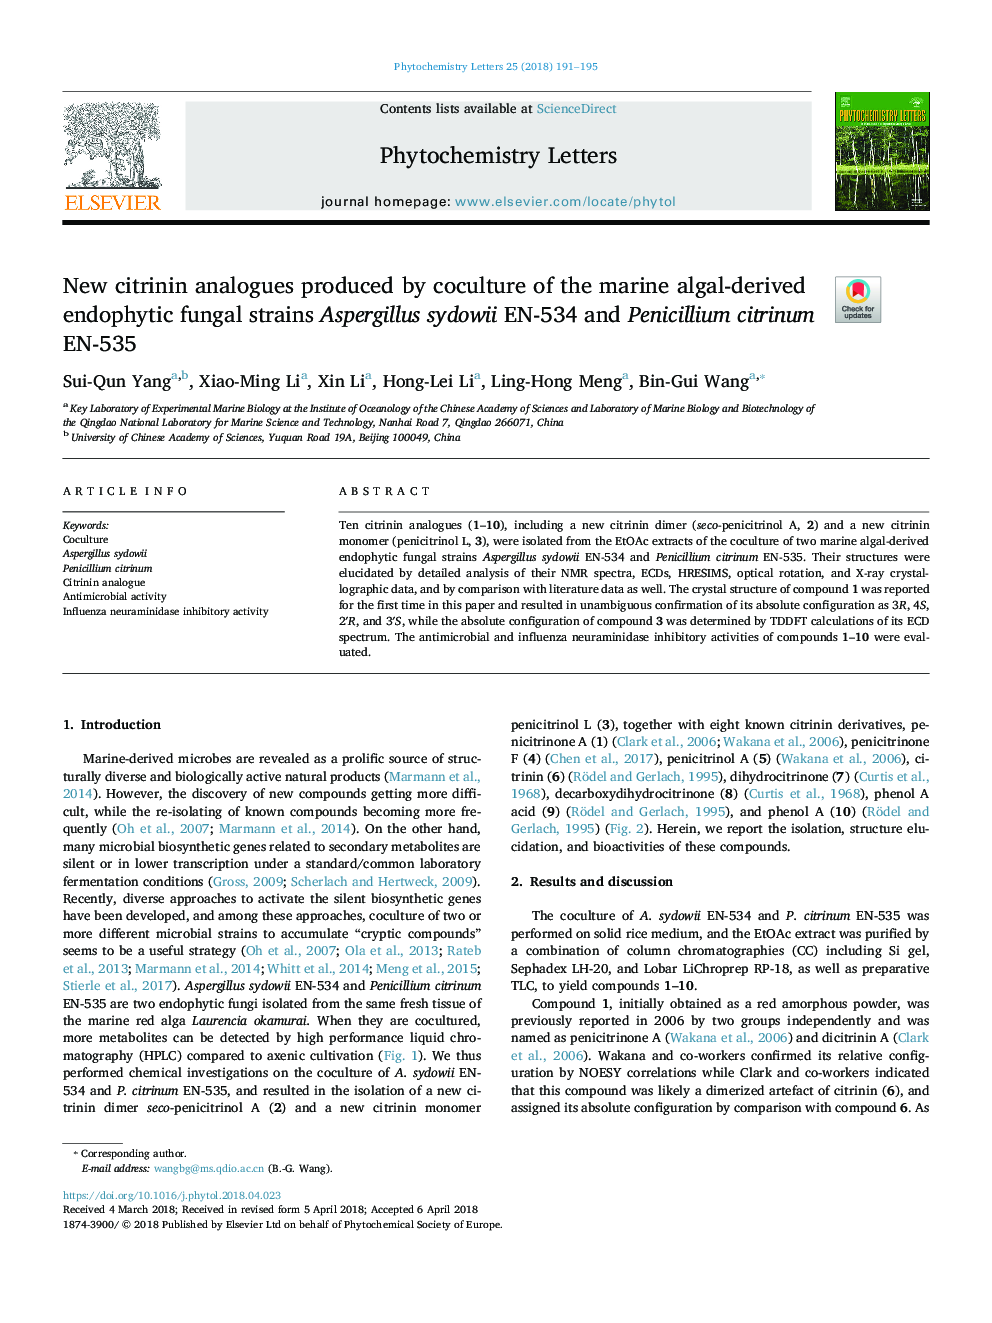 New citrinin analogues produced by coculture of the marine algal-derived endophytic fungal strains Aspergillus sydowii EN-534 and Penicillium citrinum EN-535